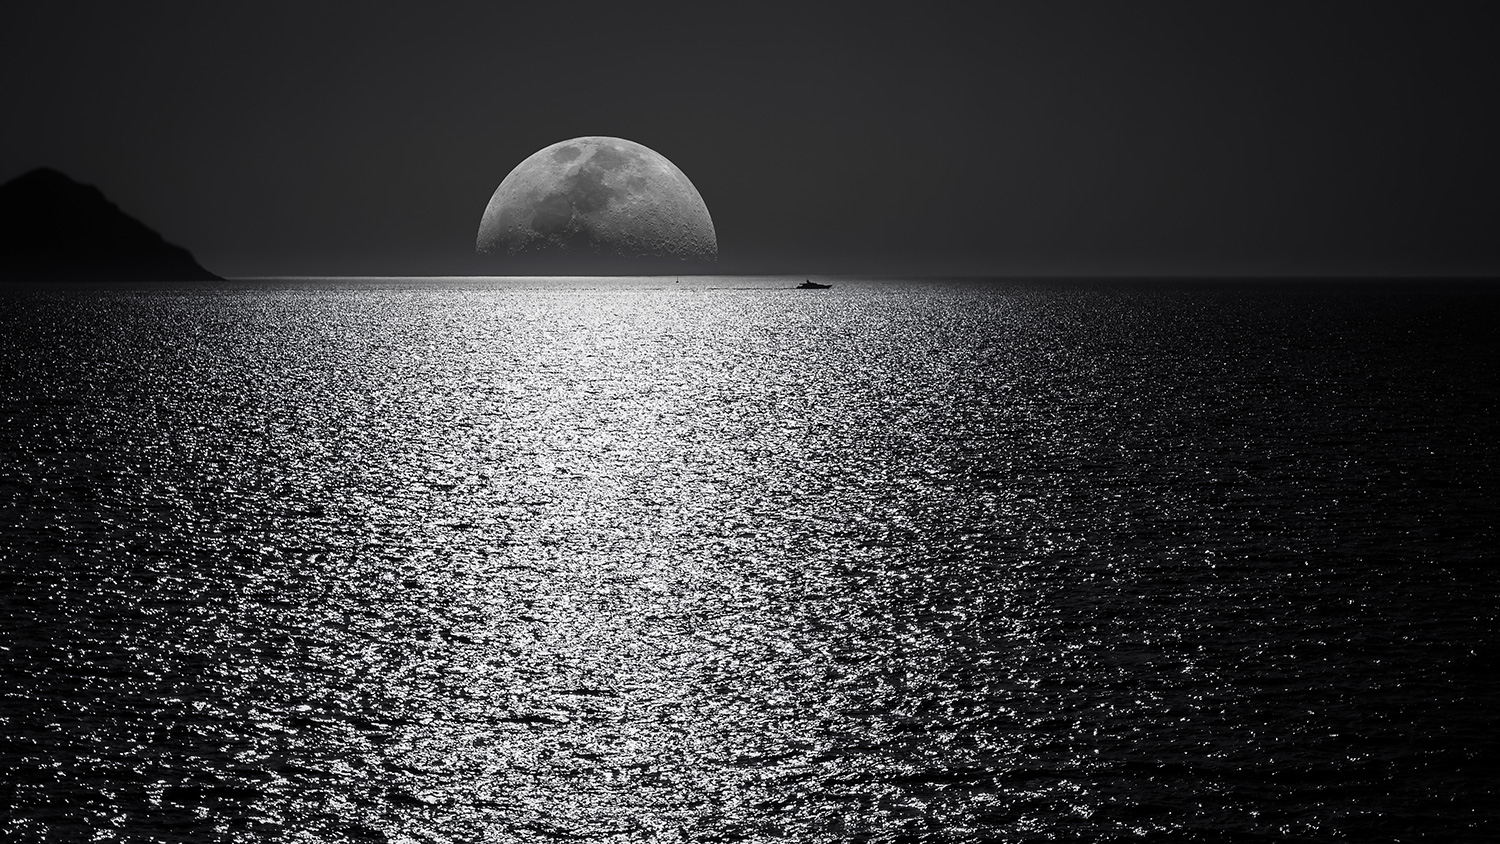 Silver Moonrise over Silver Sea